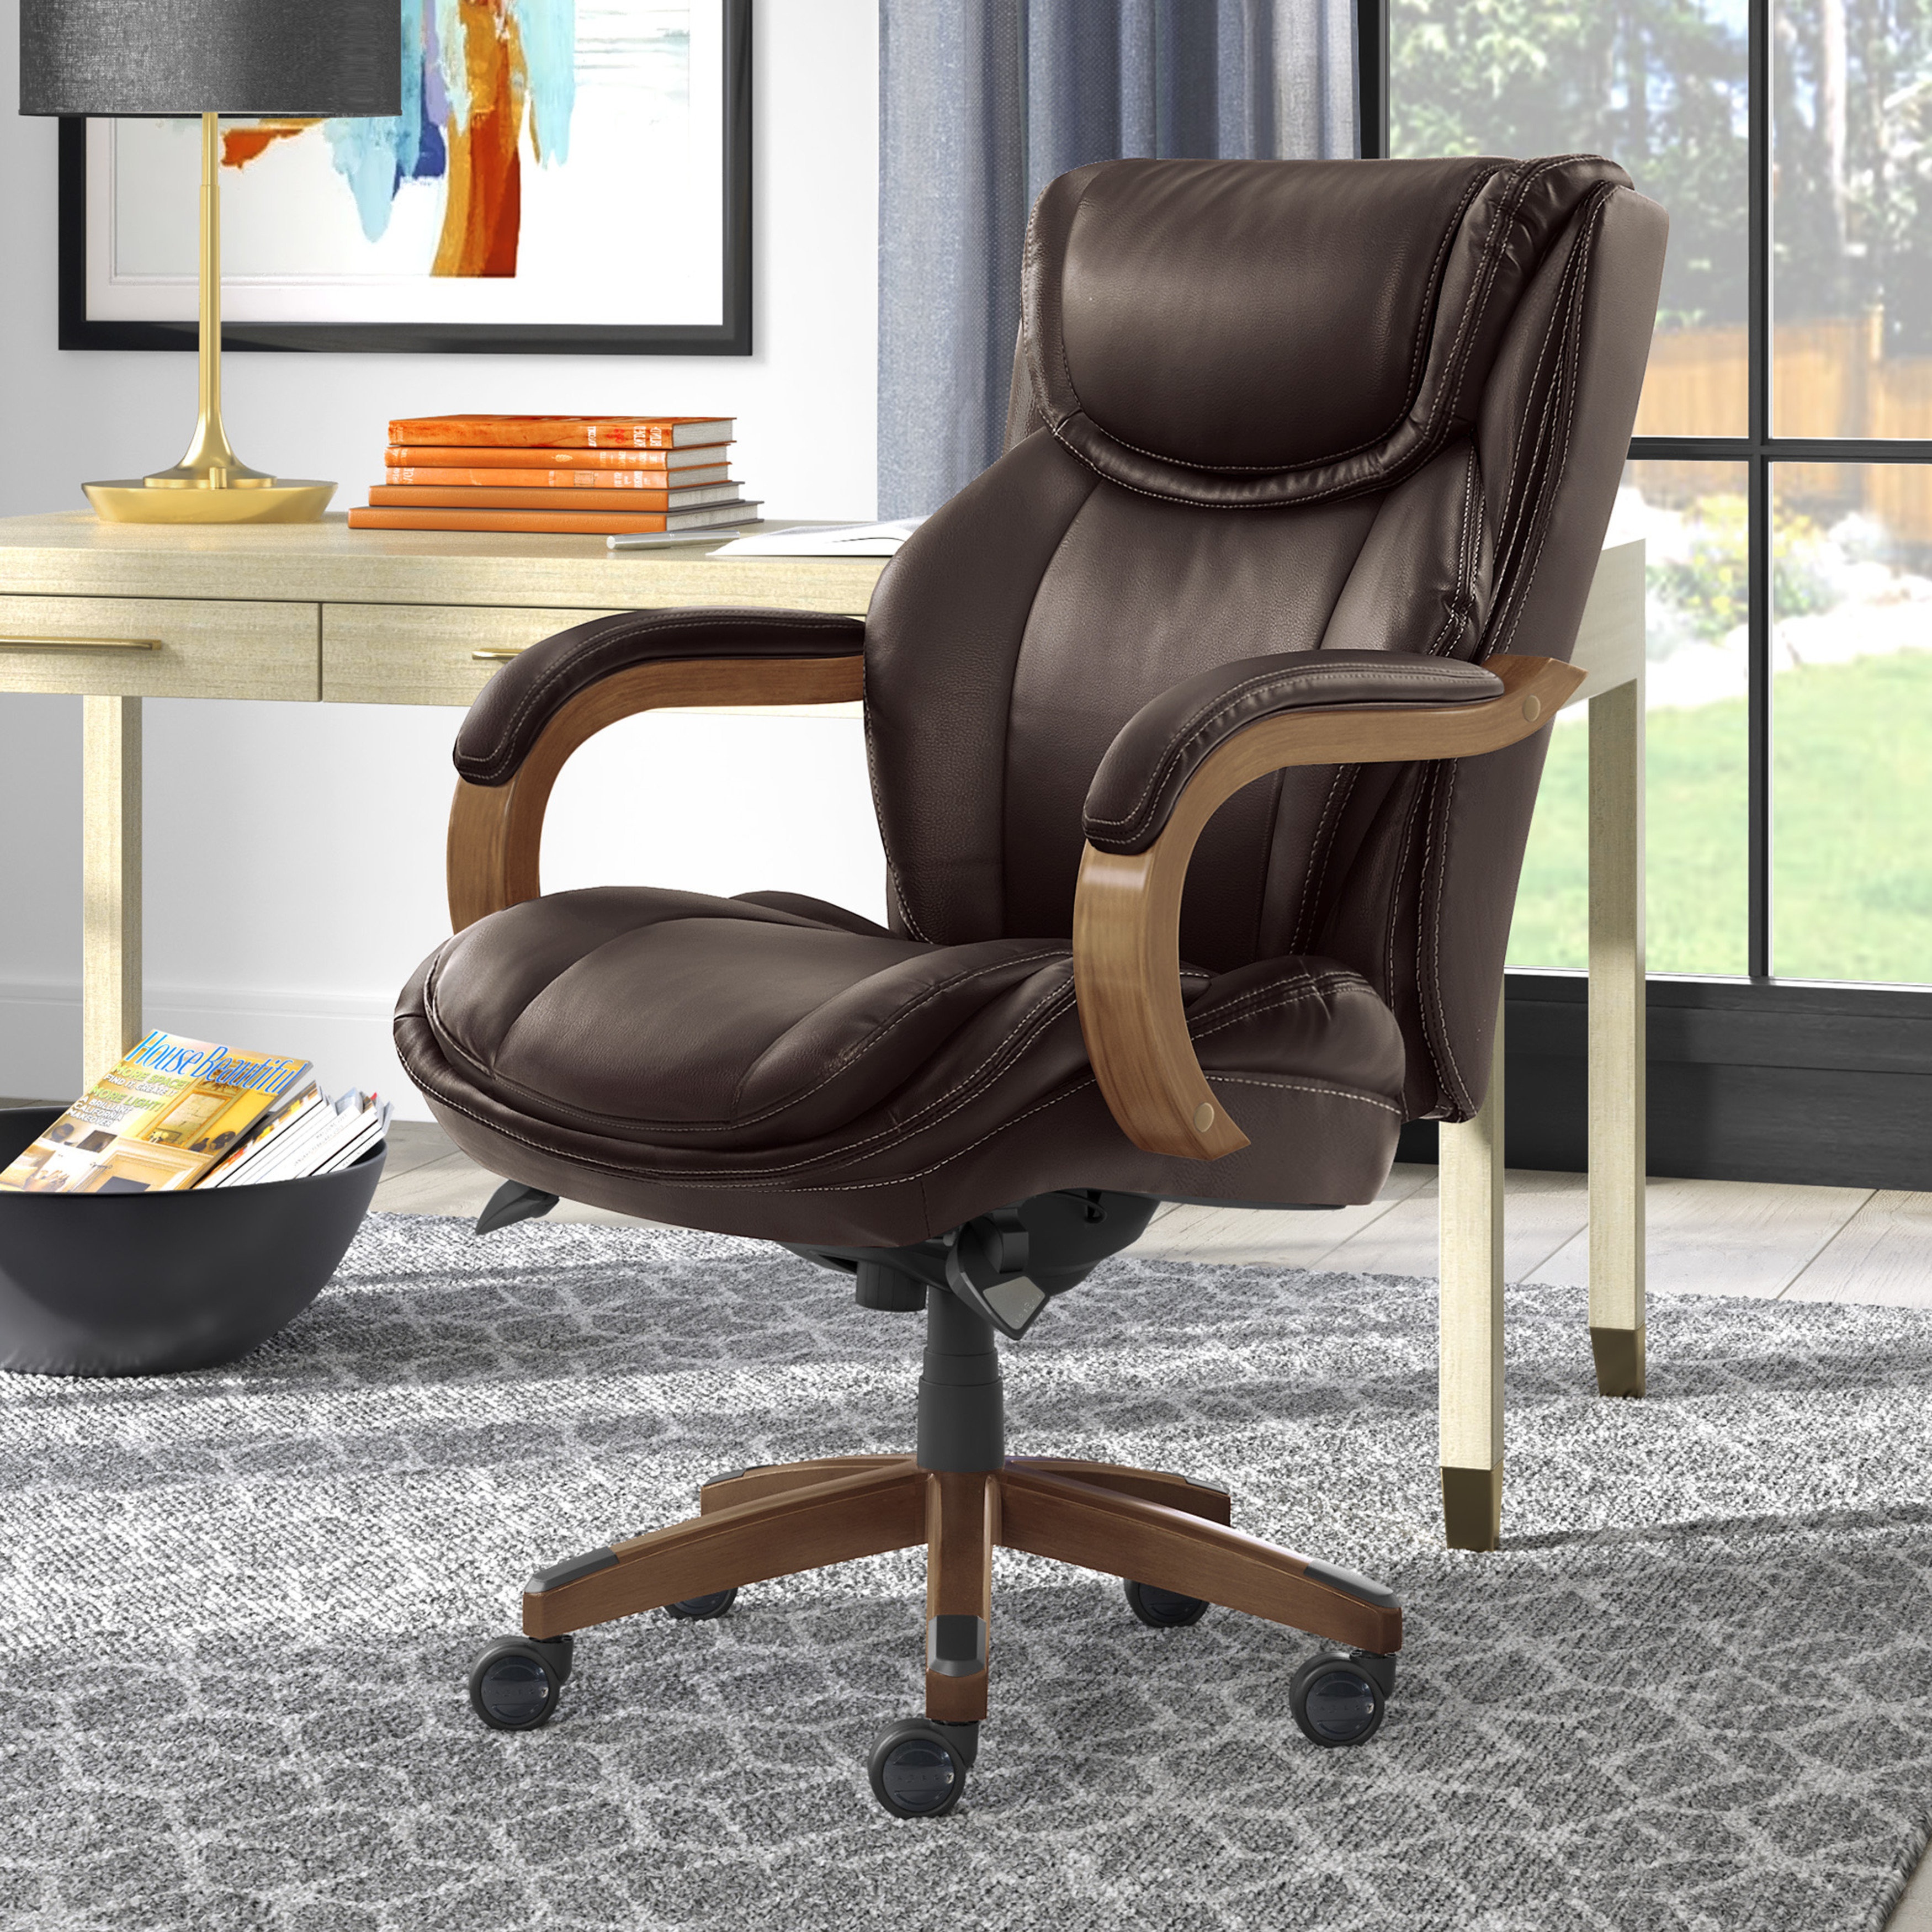 https://visualhunt.com/photos/23/harnett-la-z-boy-big-and-tall-ergonomic-executive-office-chair-with-comfort-core-cushions.jpg